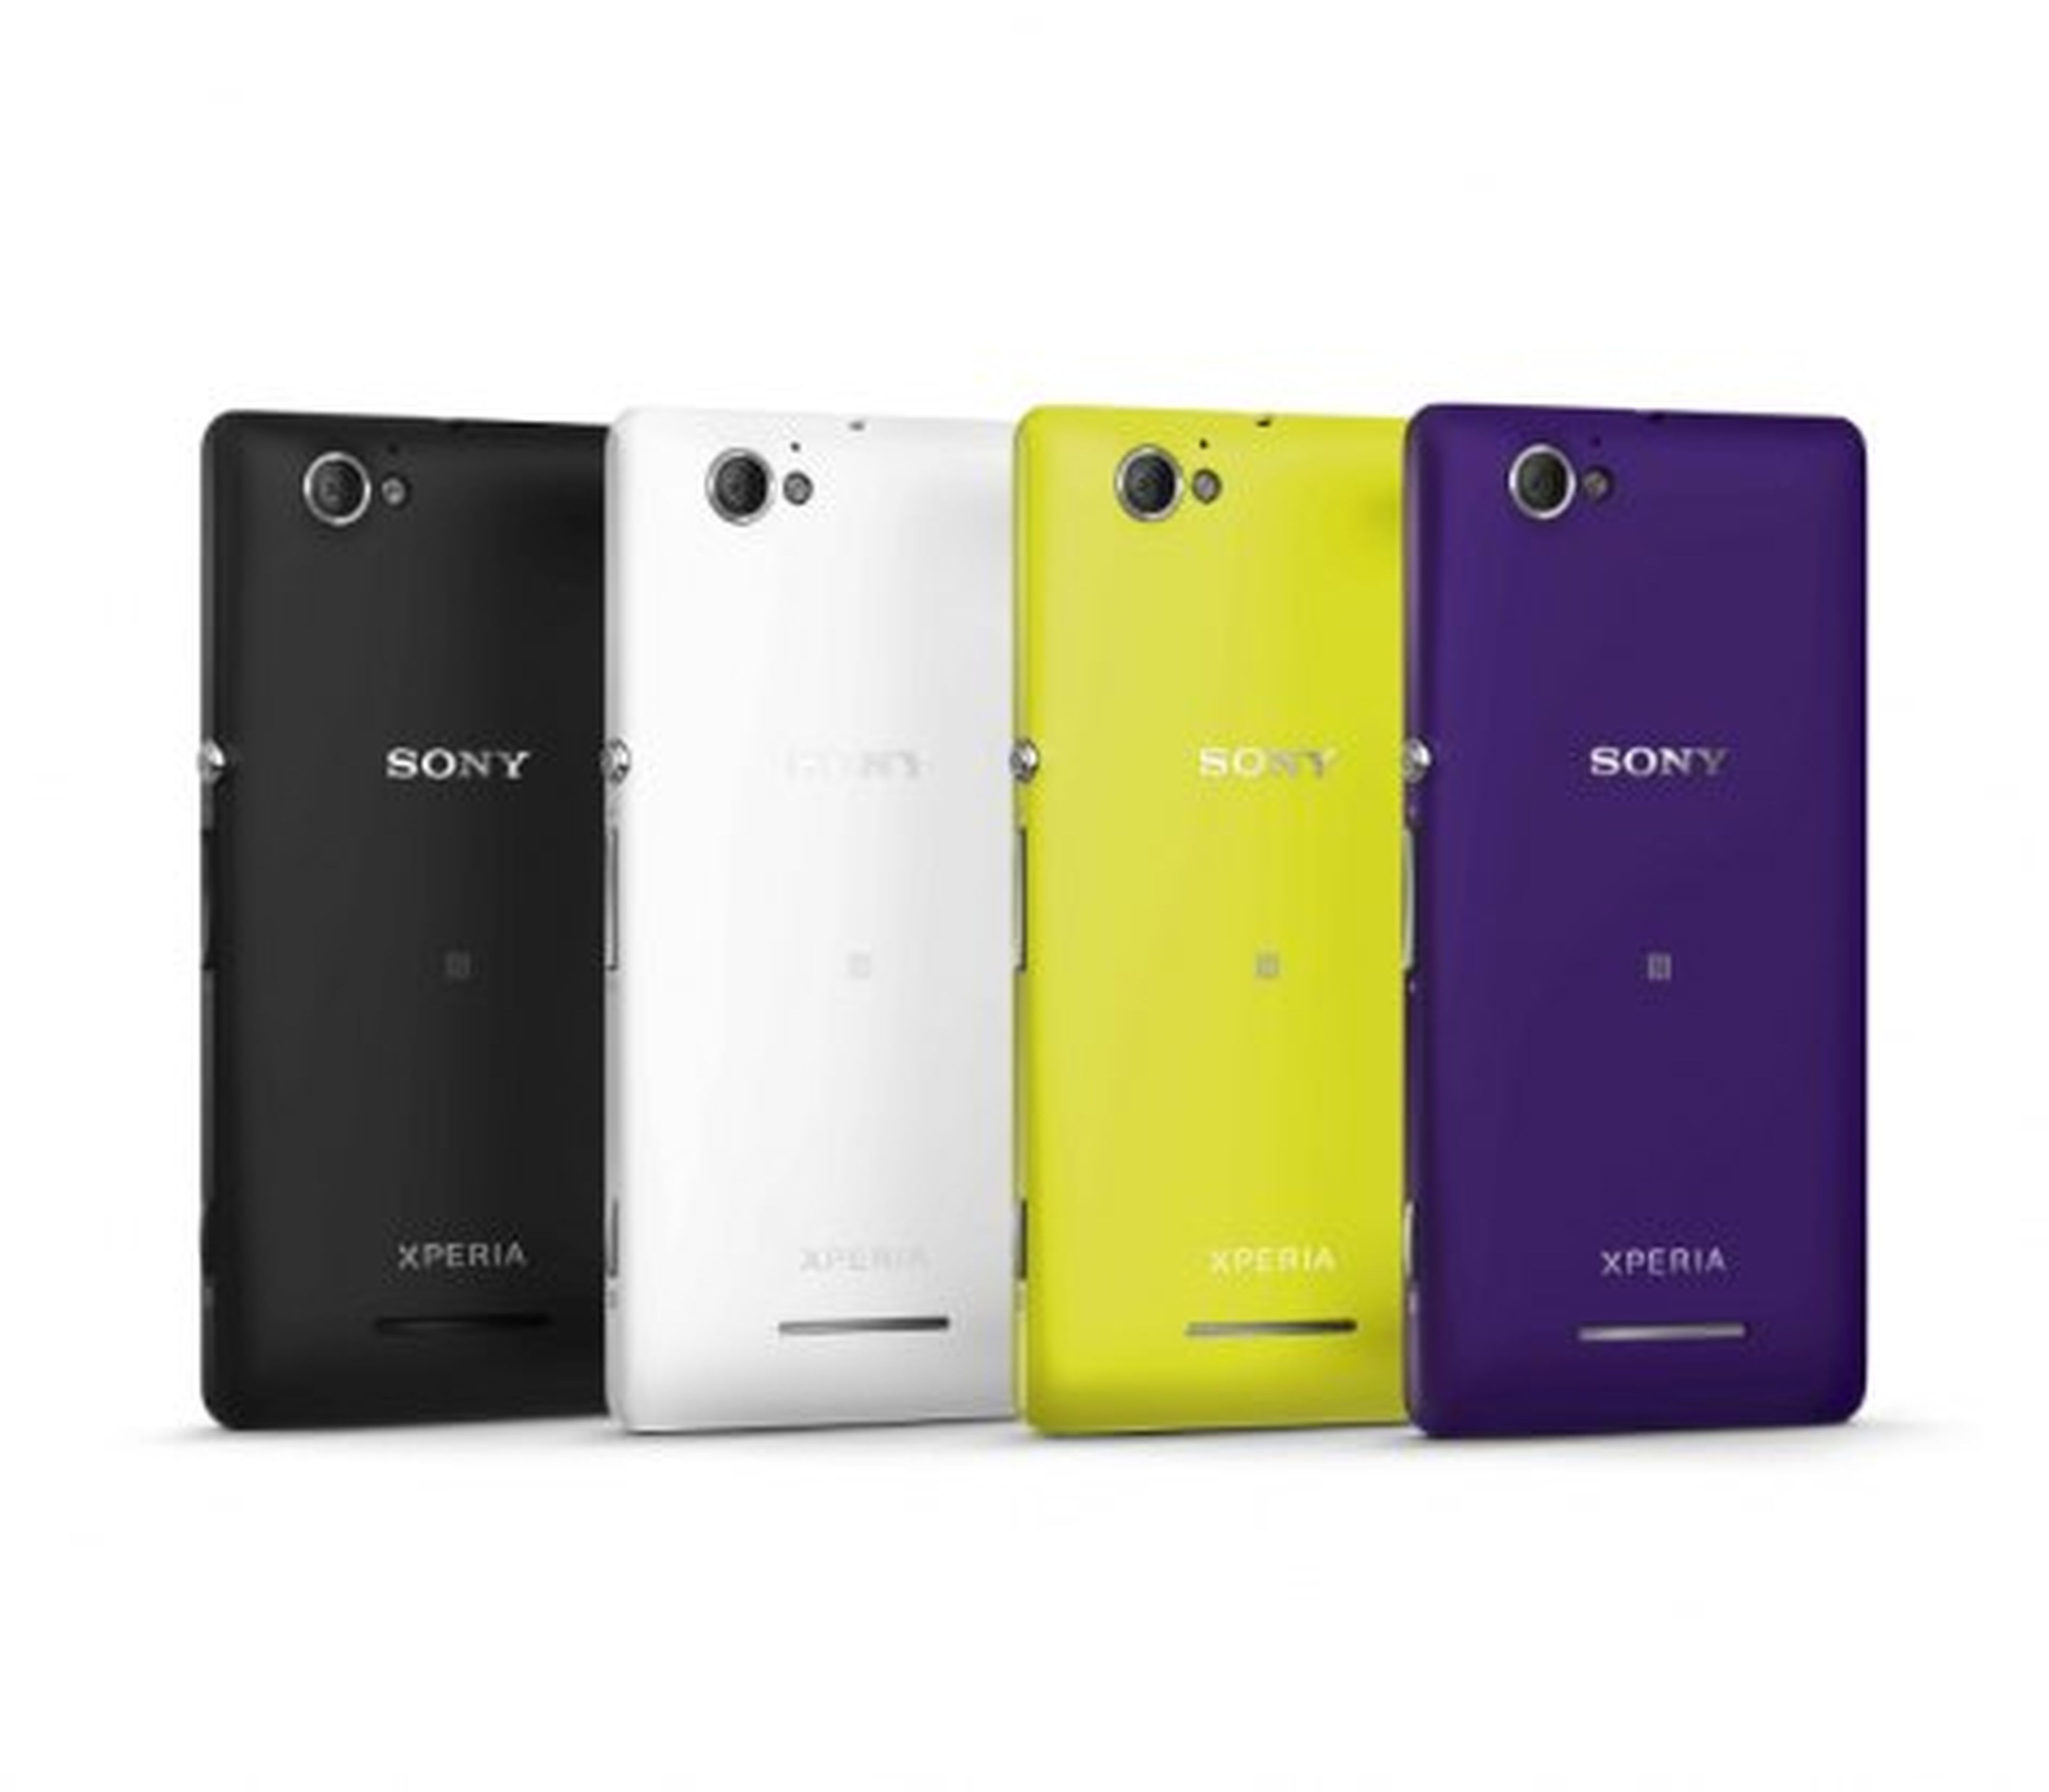 Sony XPeria M, un smartphone asequible de gama media